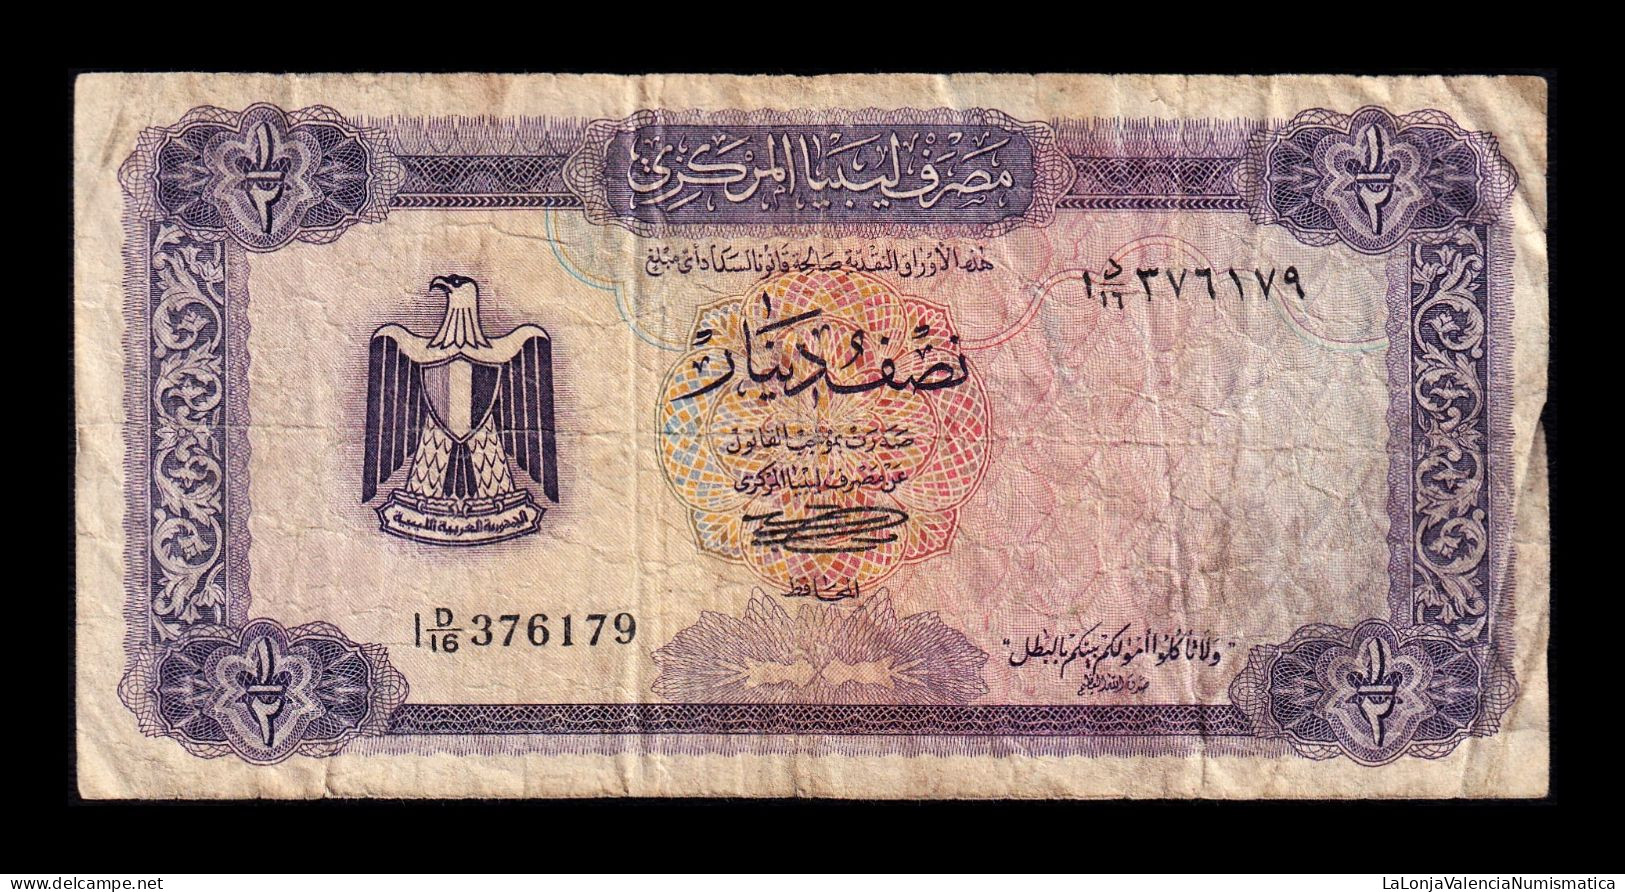 Libia Libya ½ Dinar 1972 Pick 34b Bc F - Libya